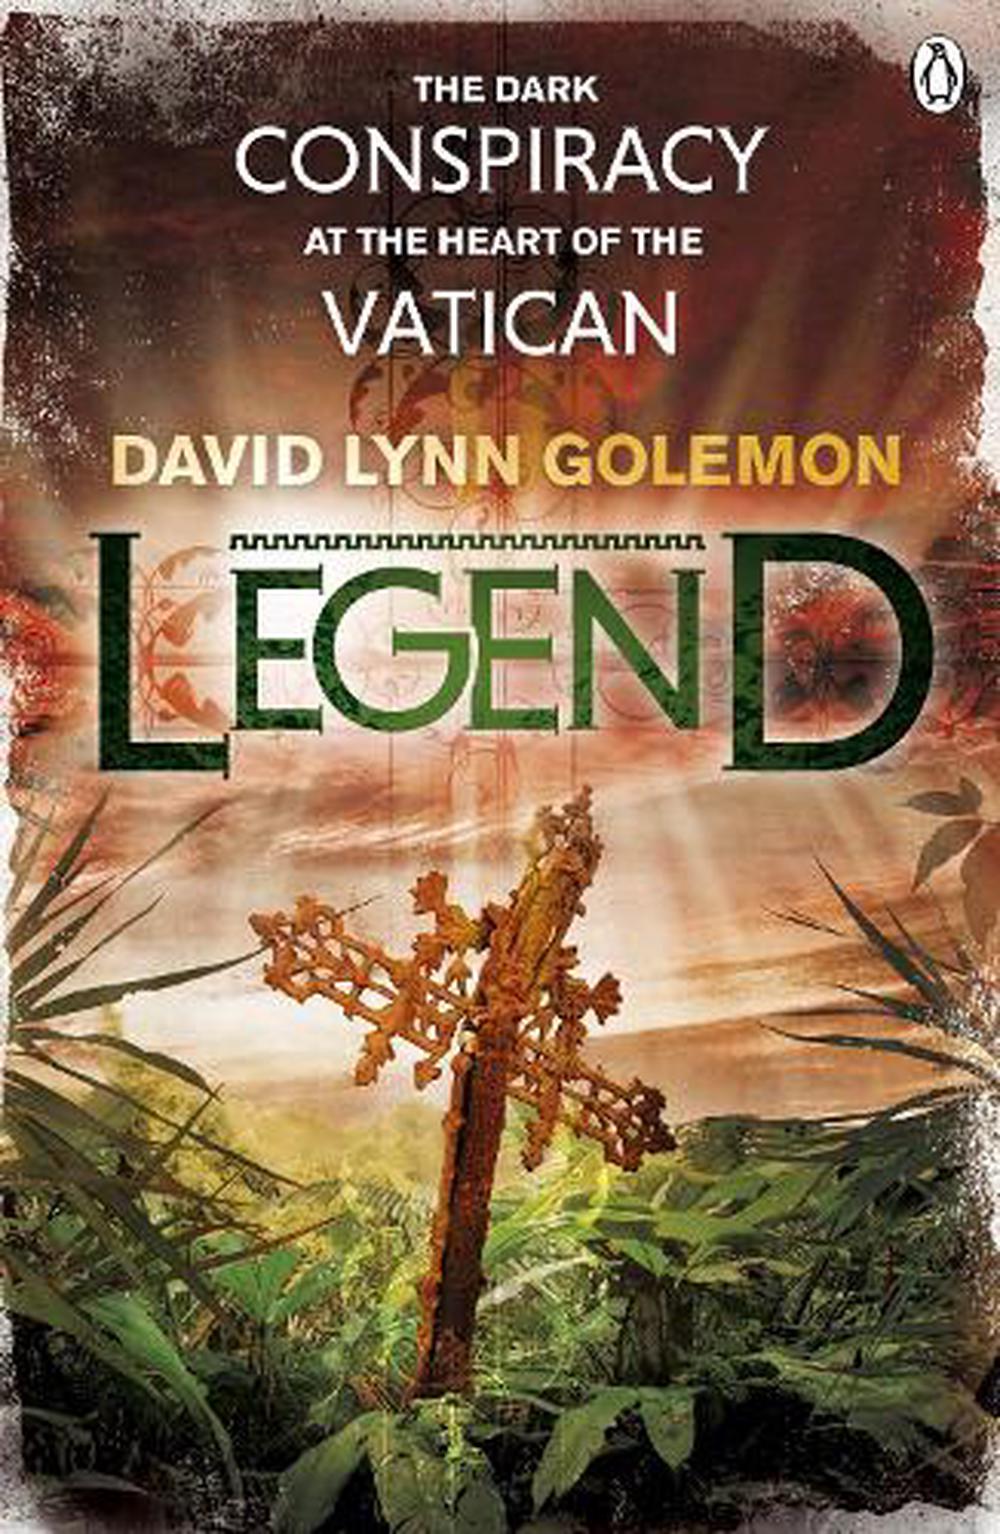 Legend by David Lynn Golemon, Paperback, 9781405911955 Buy online at